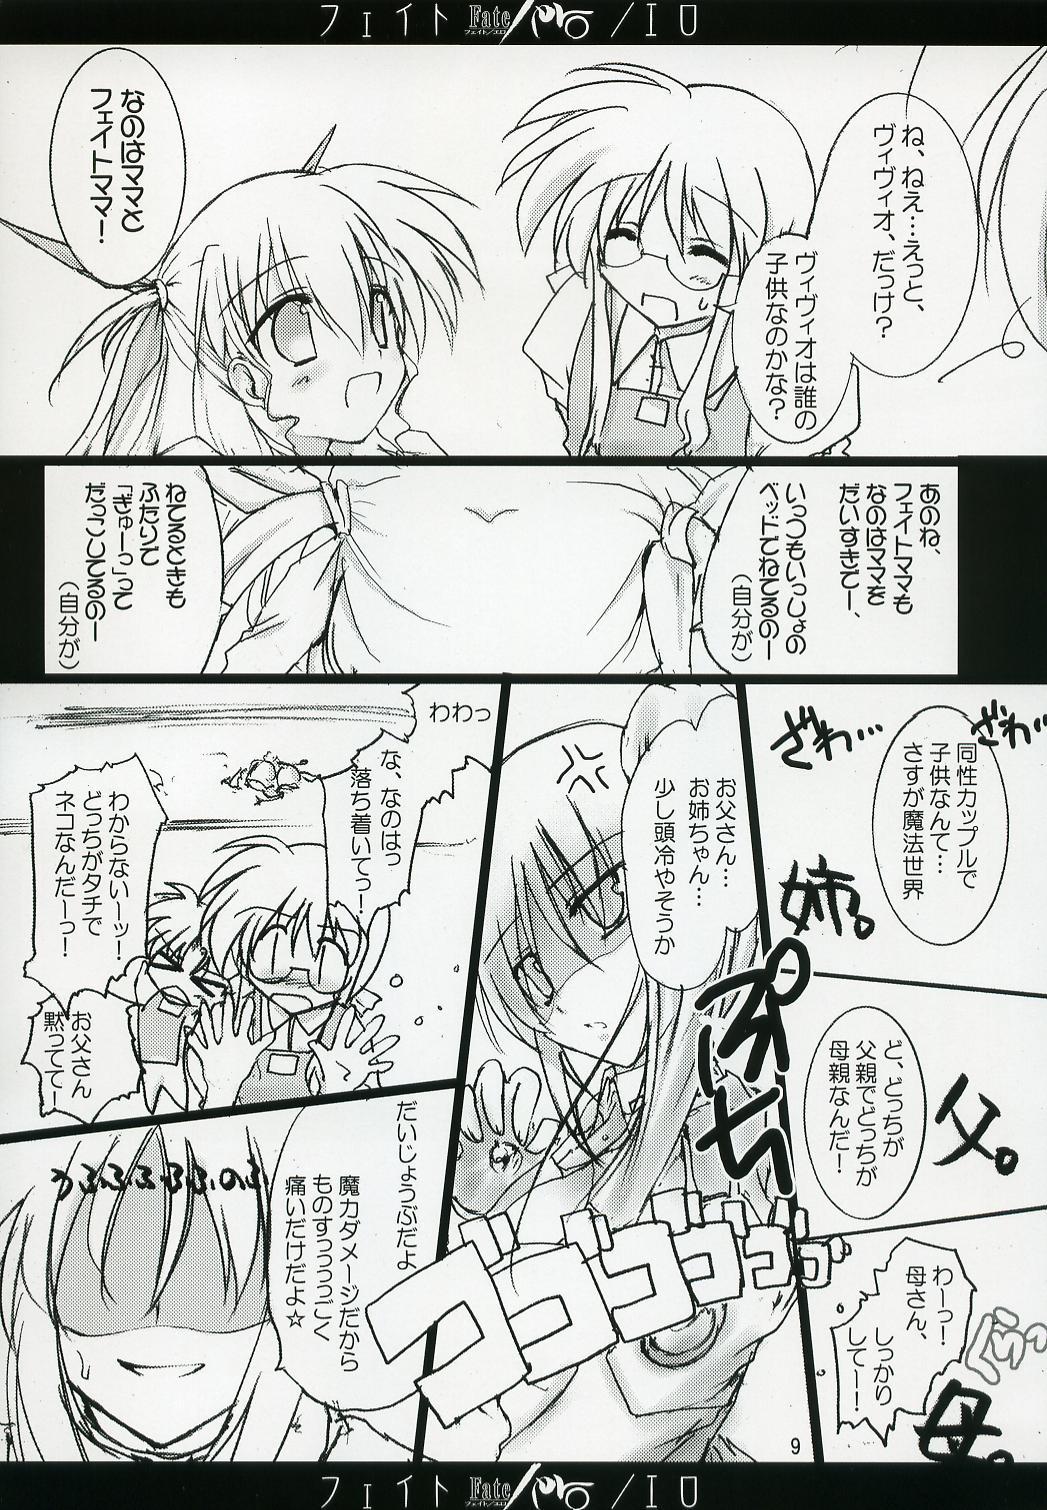  Fate/ero - Mahou shoujo lyrical nanoha Chat - Page 8